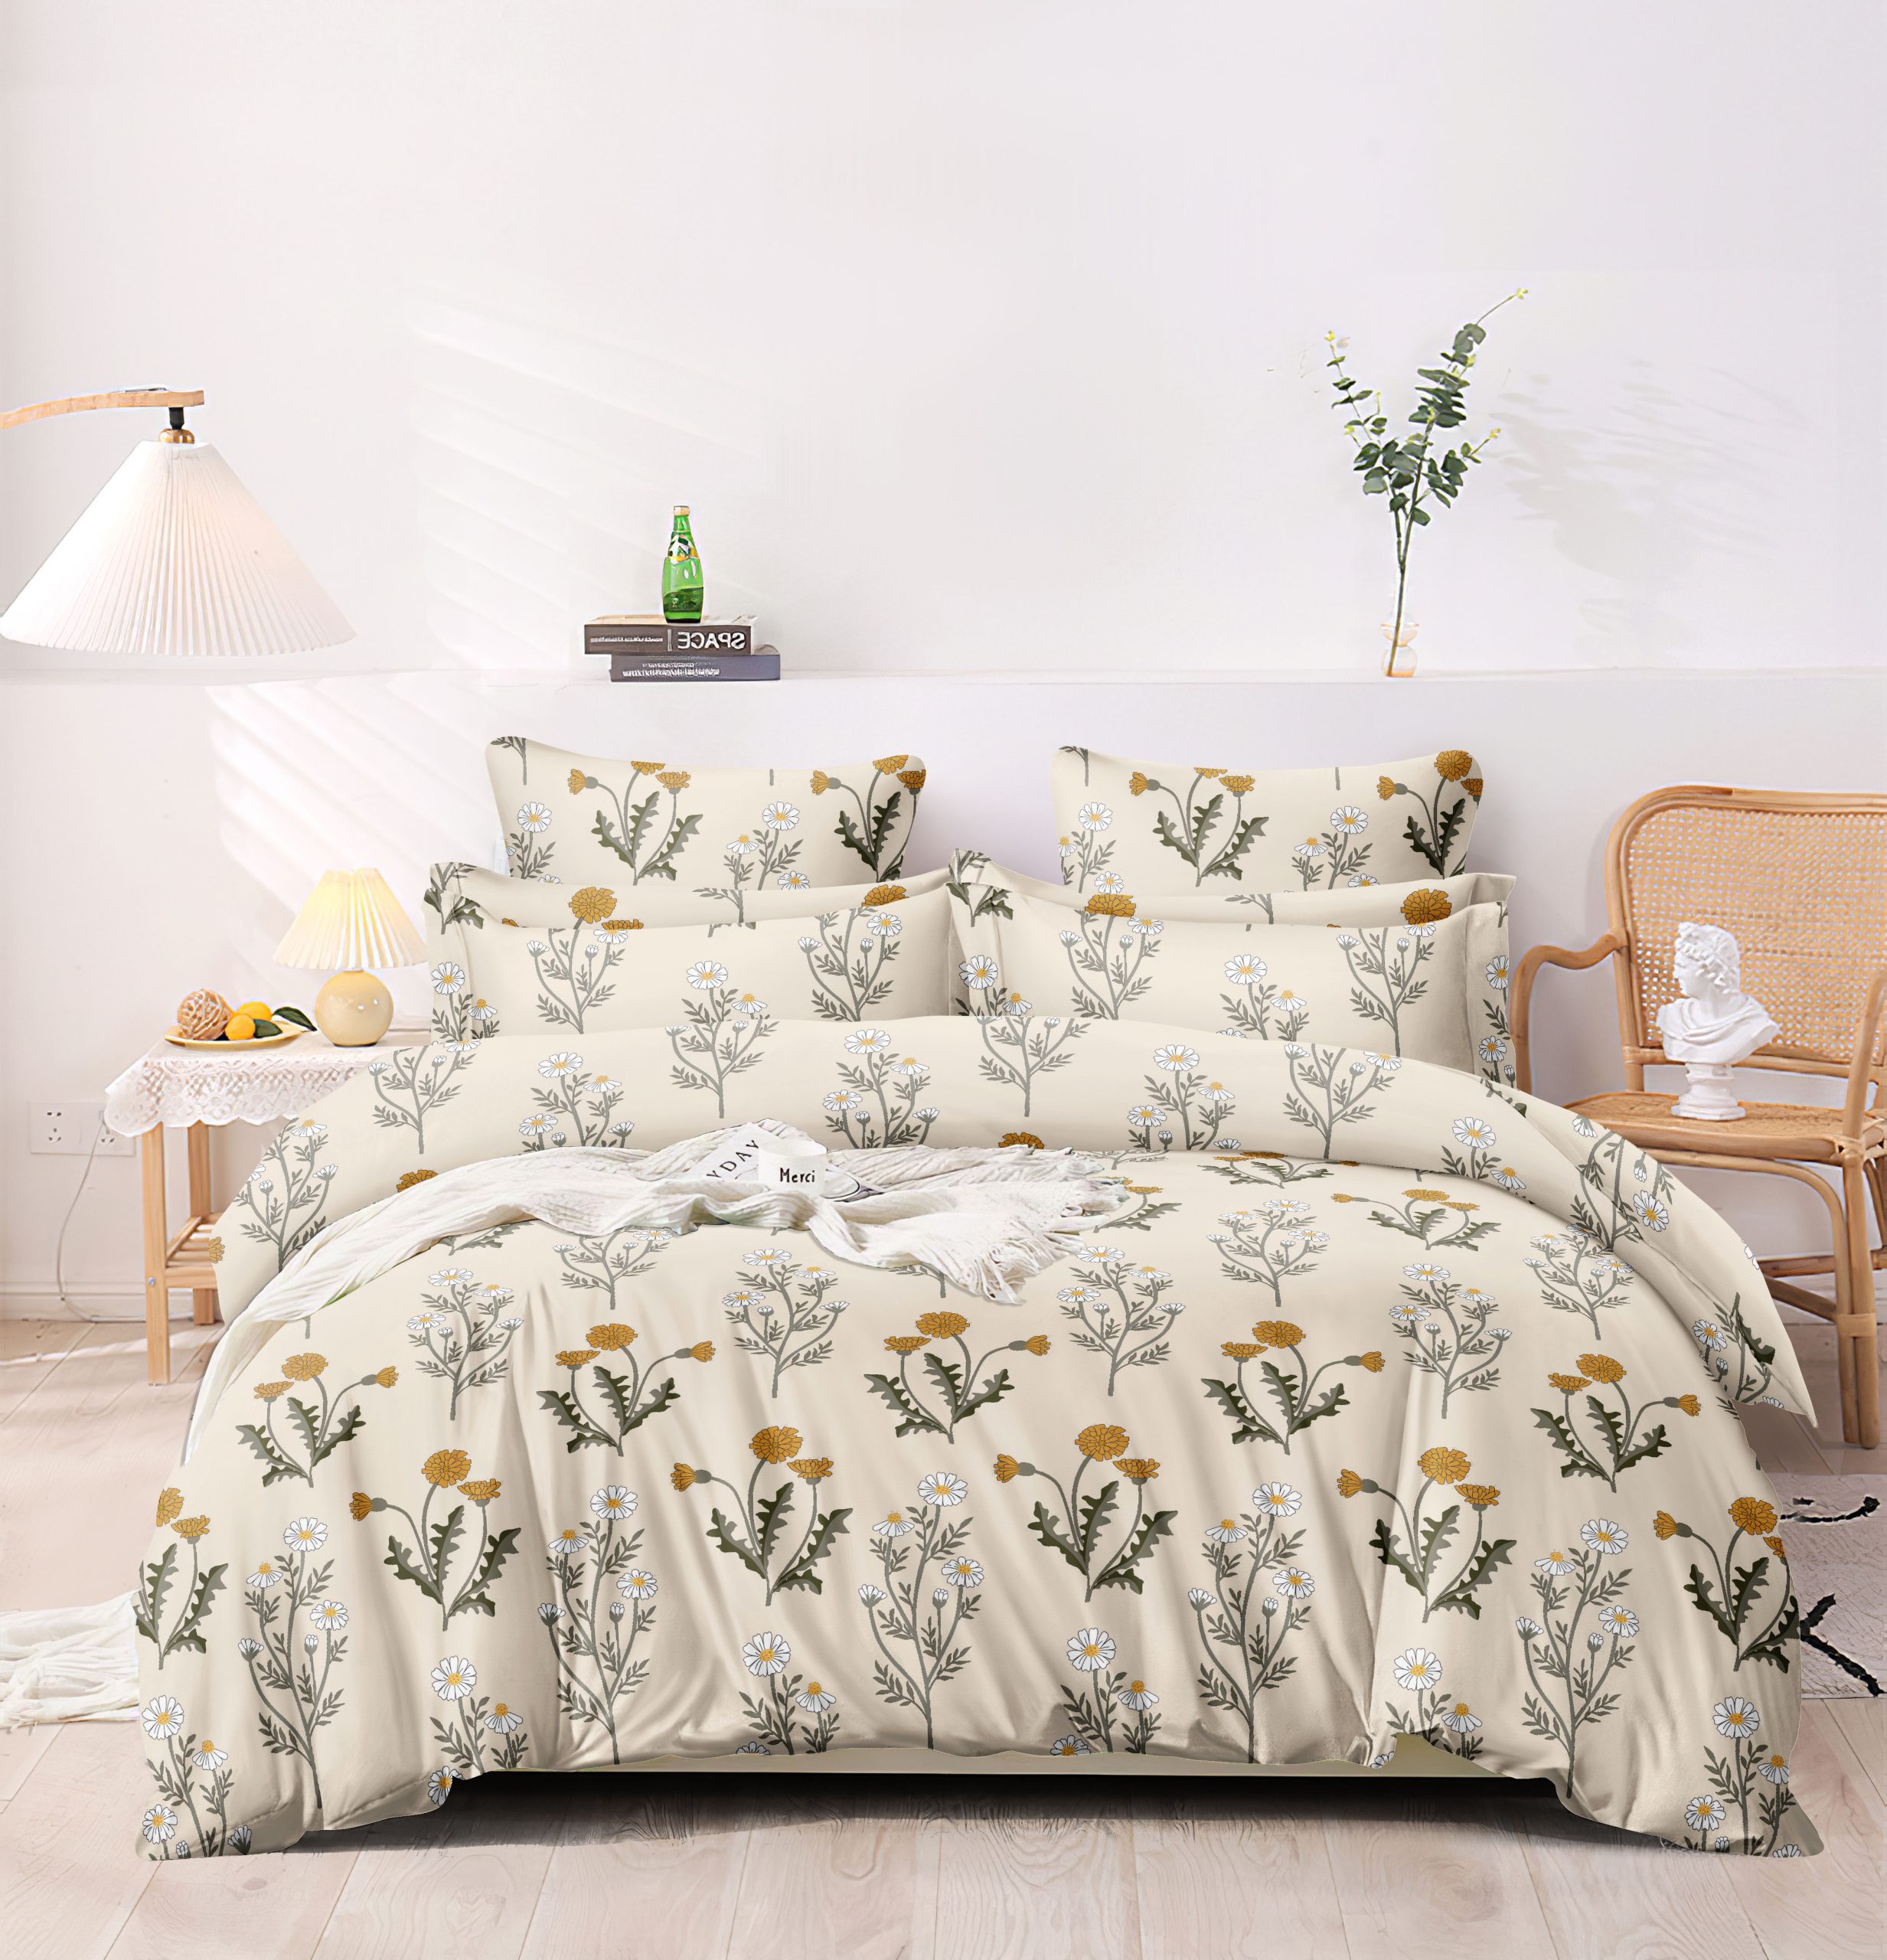 Homewards Floral Double Bed Comforter – Ultrasoft Handfeel, 100% Polyester Material, 150 GSM Microfiber Inner, Ecru Color